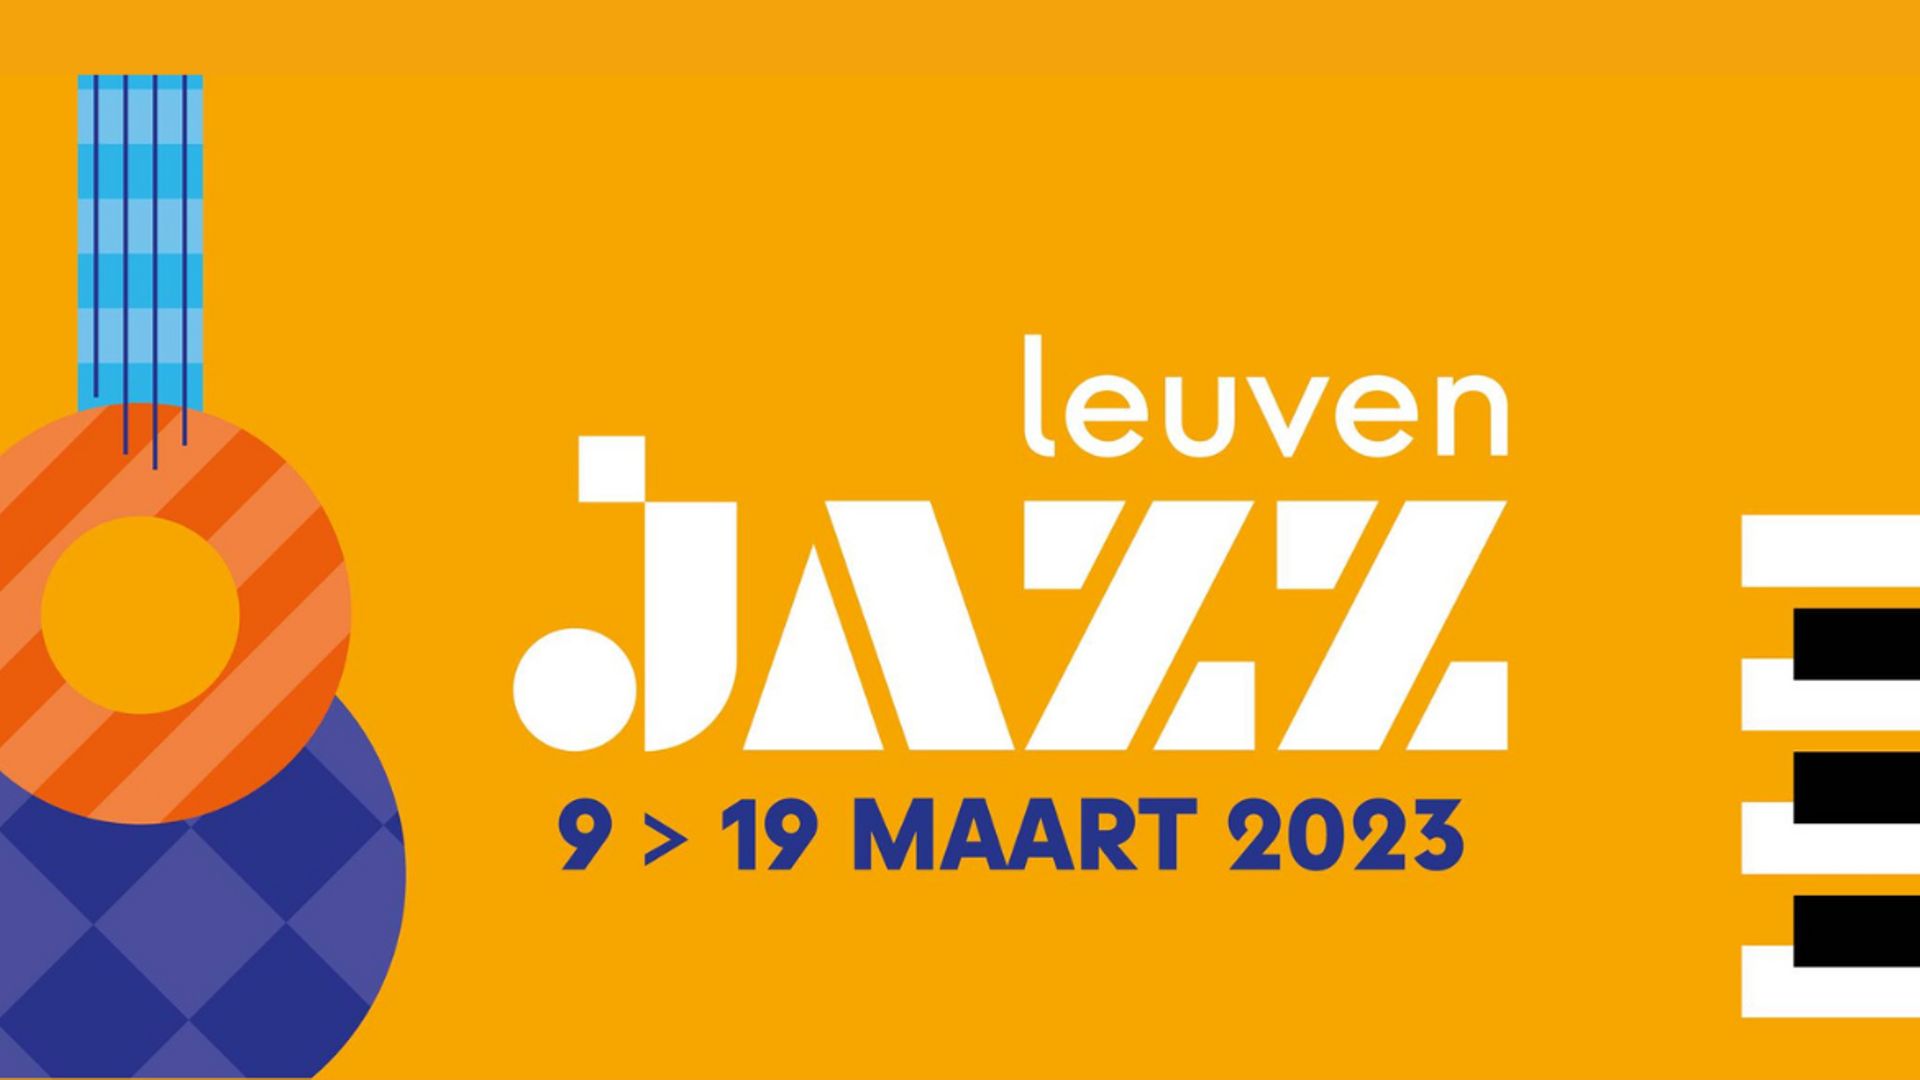 Leuven Jazz Festival 2023